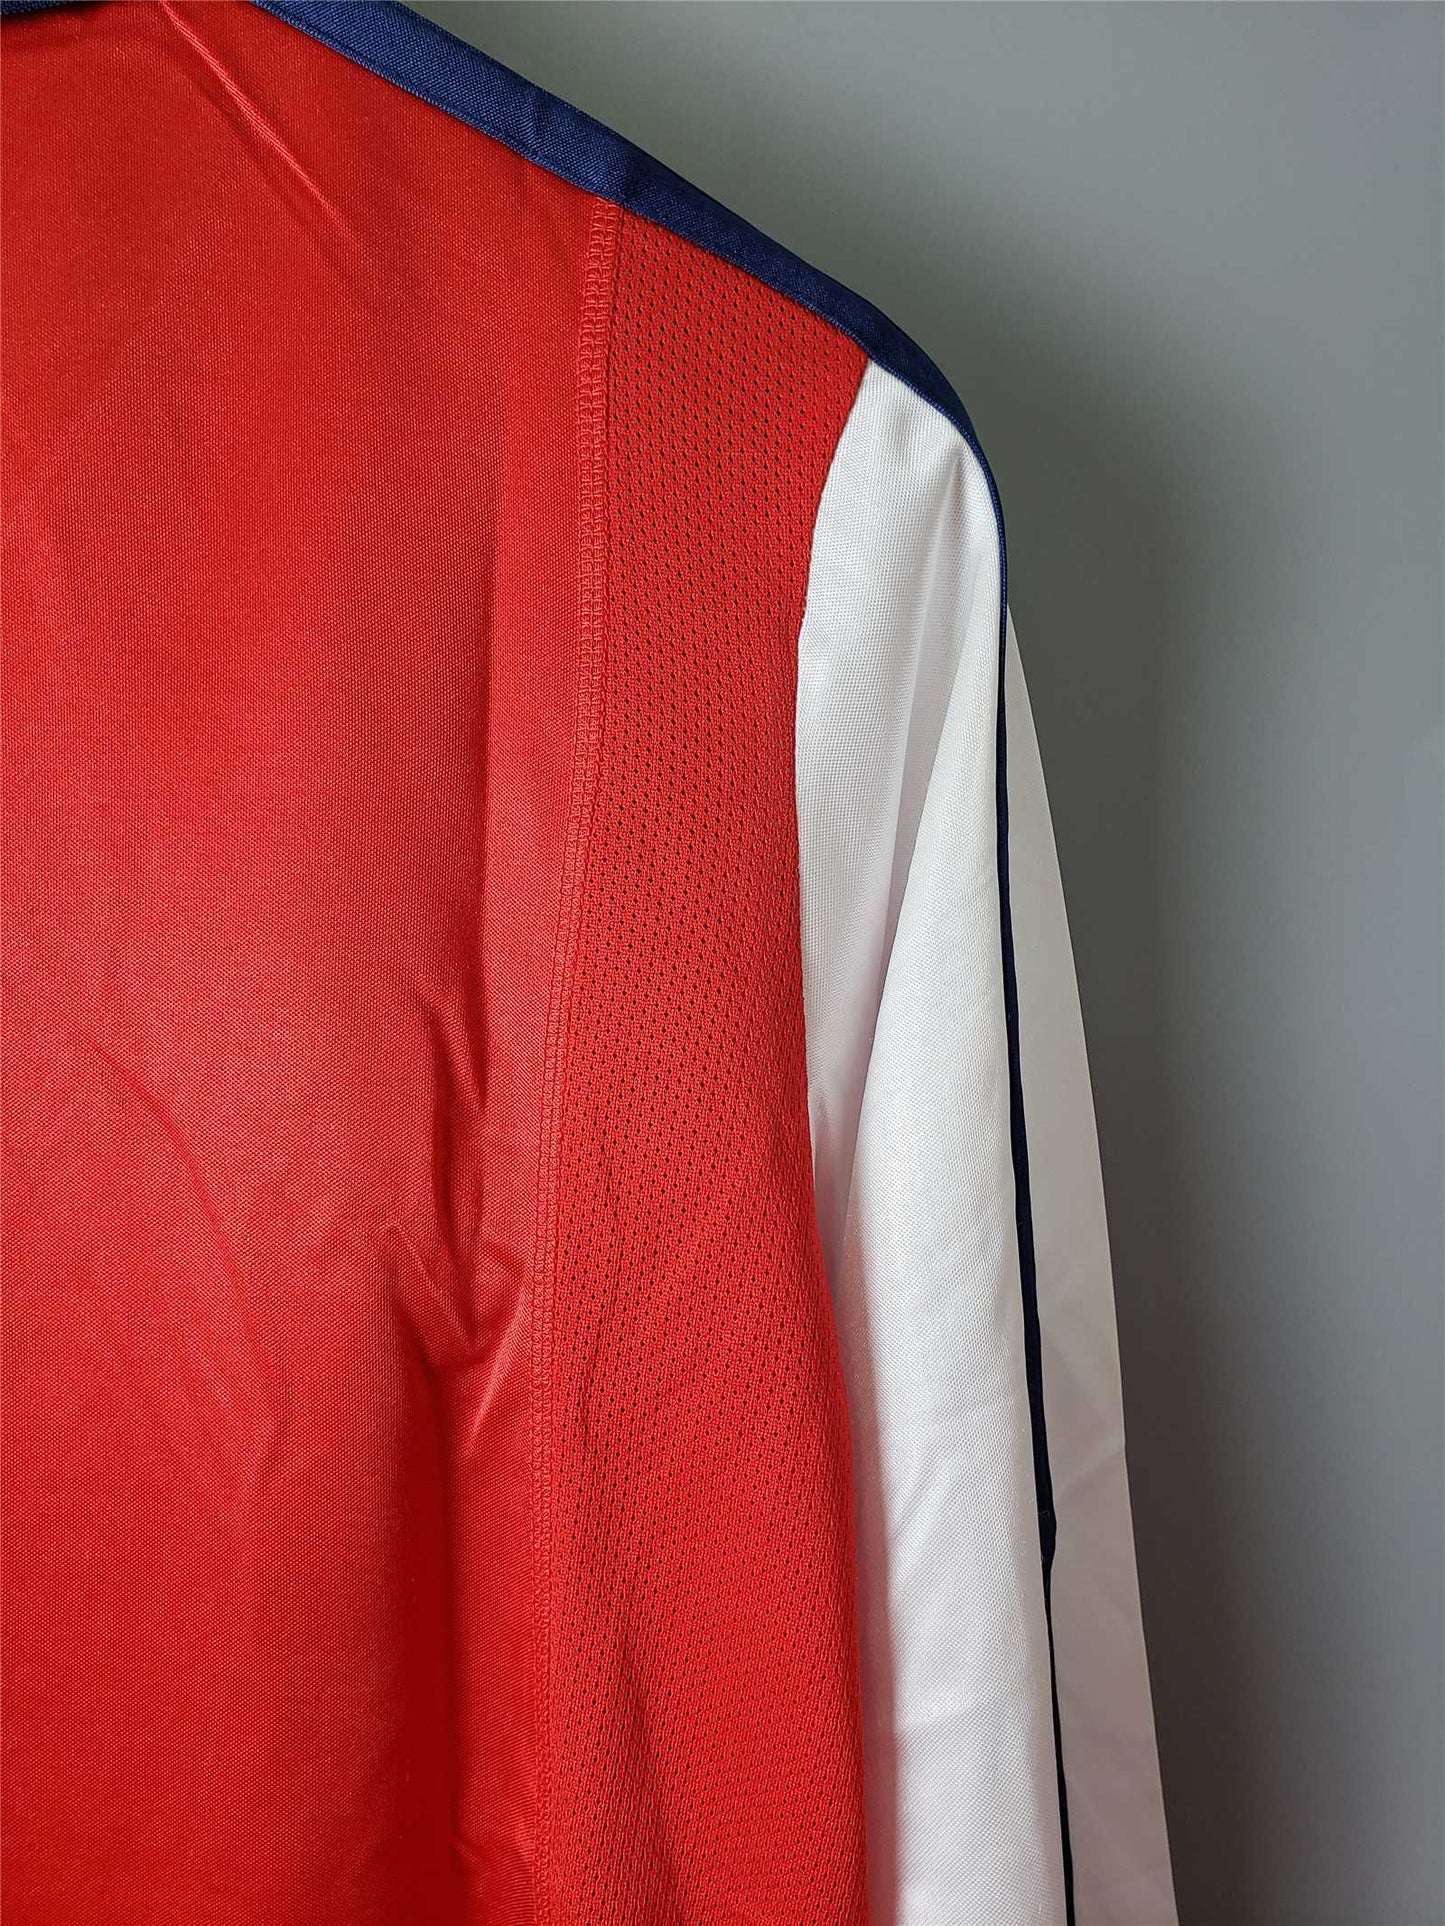 Arsenal 00-02 Home Long Sleeve Shirt